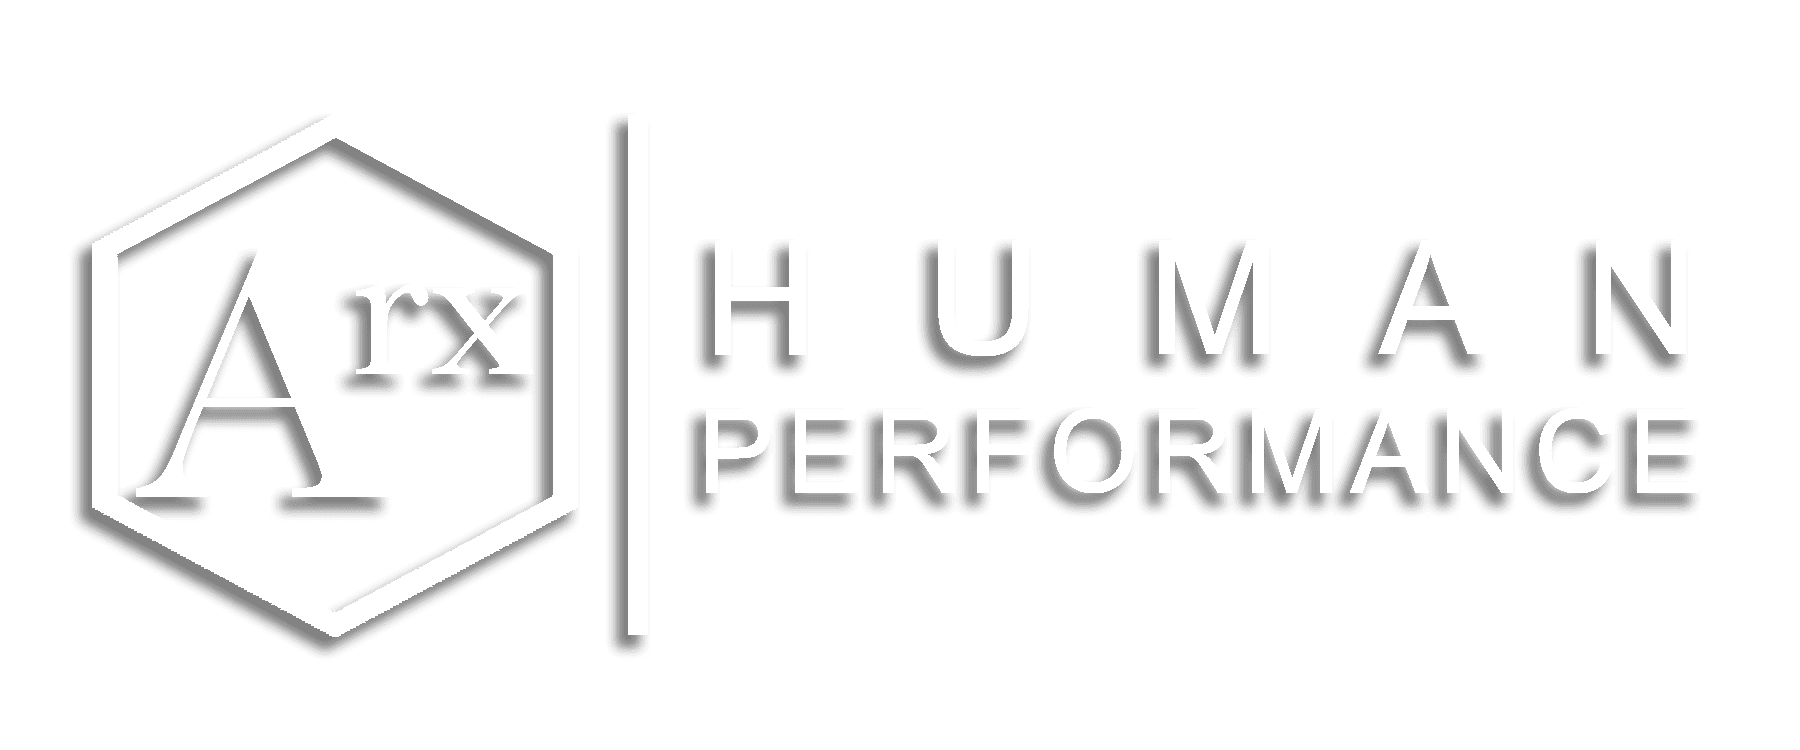 Arx Human Performance